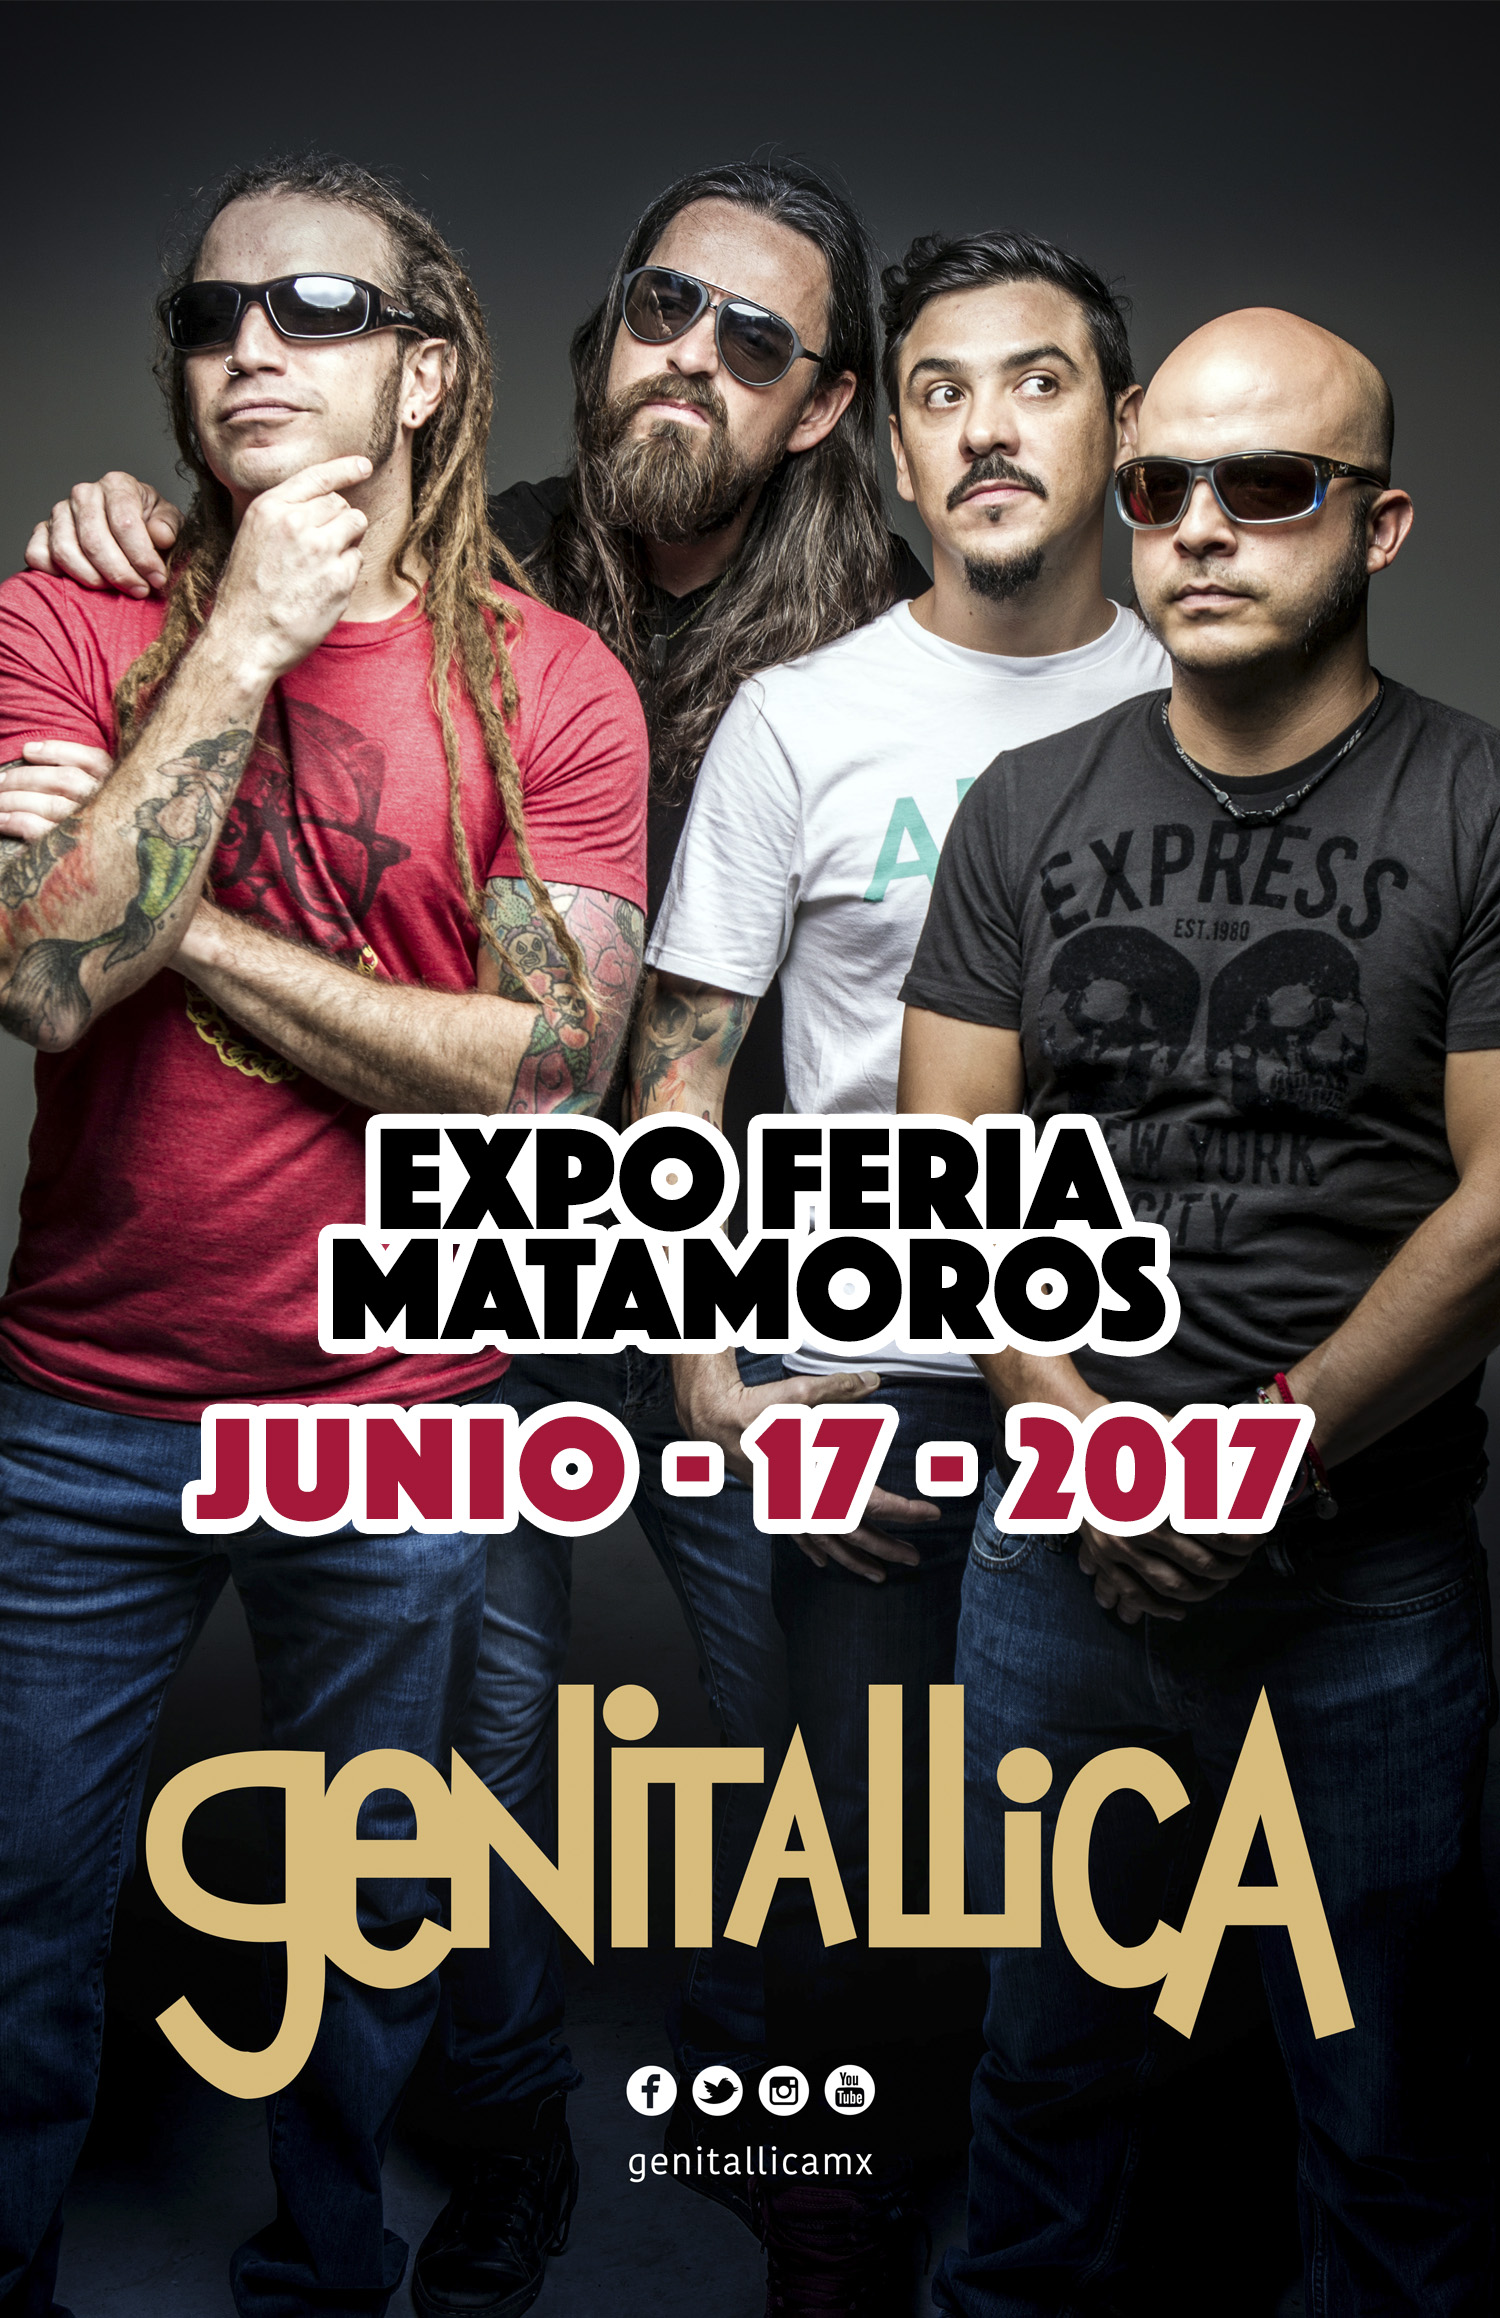 Genitallica @ Expo Feria Matamoros